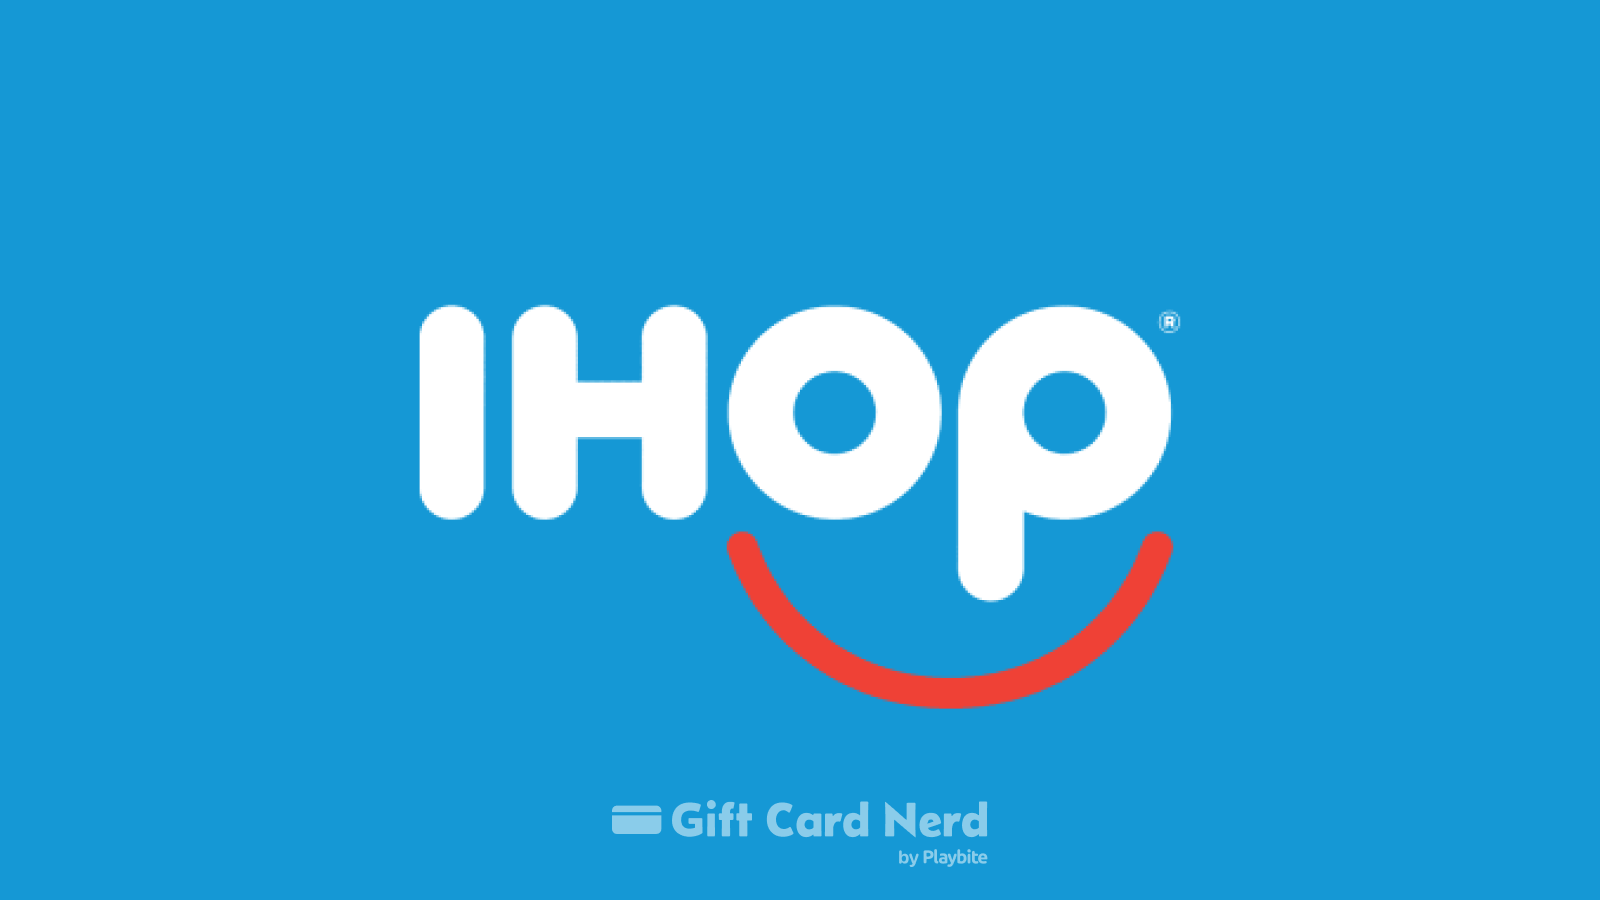 Can I Use an IHOP Gift Card on DoorDash?